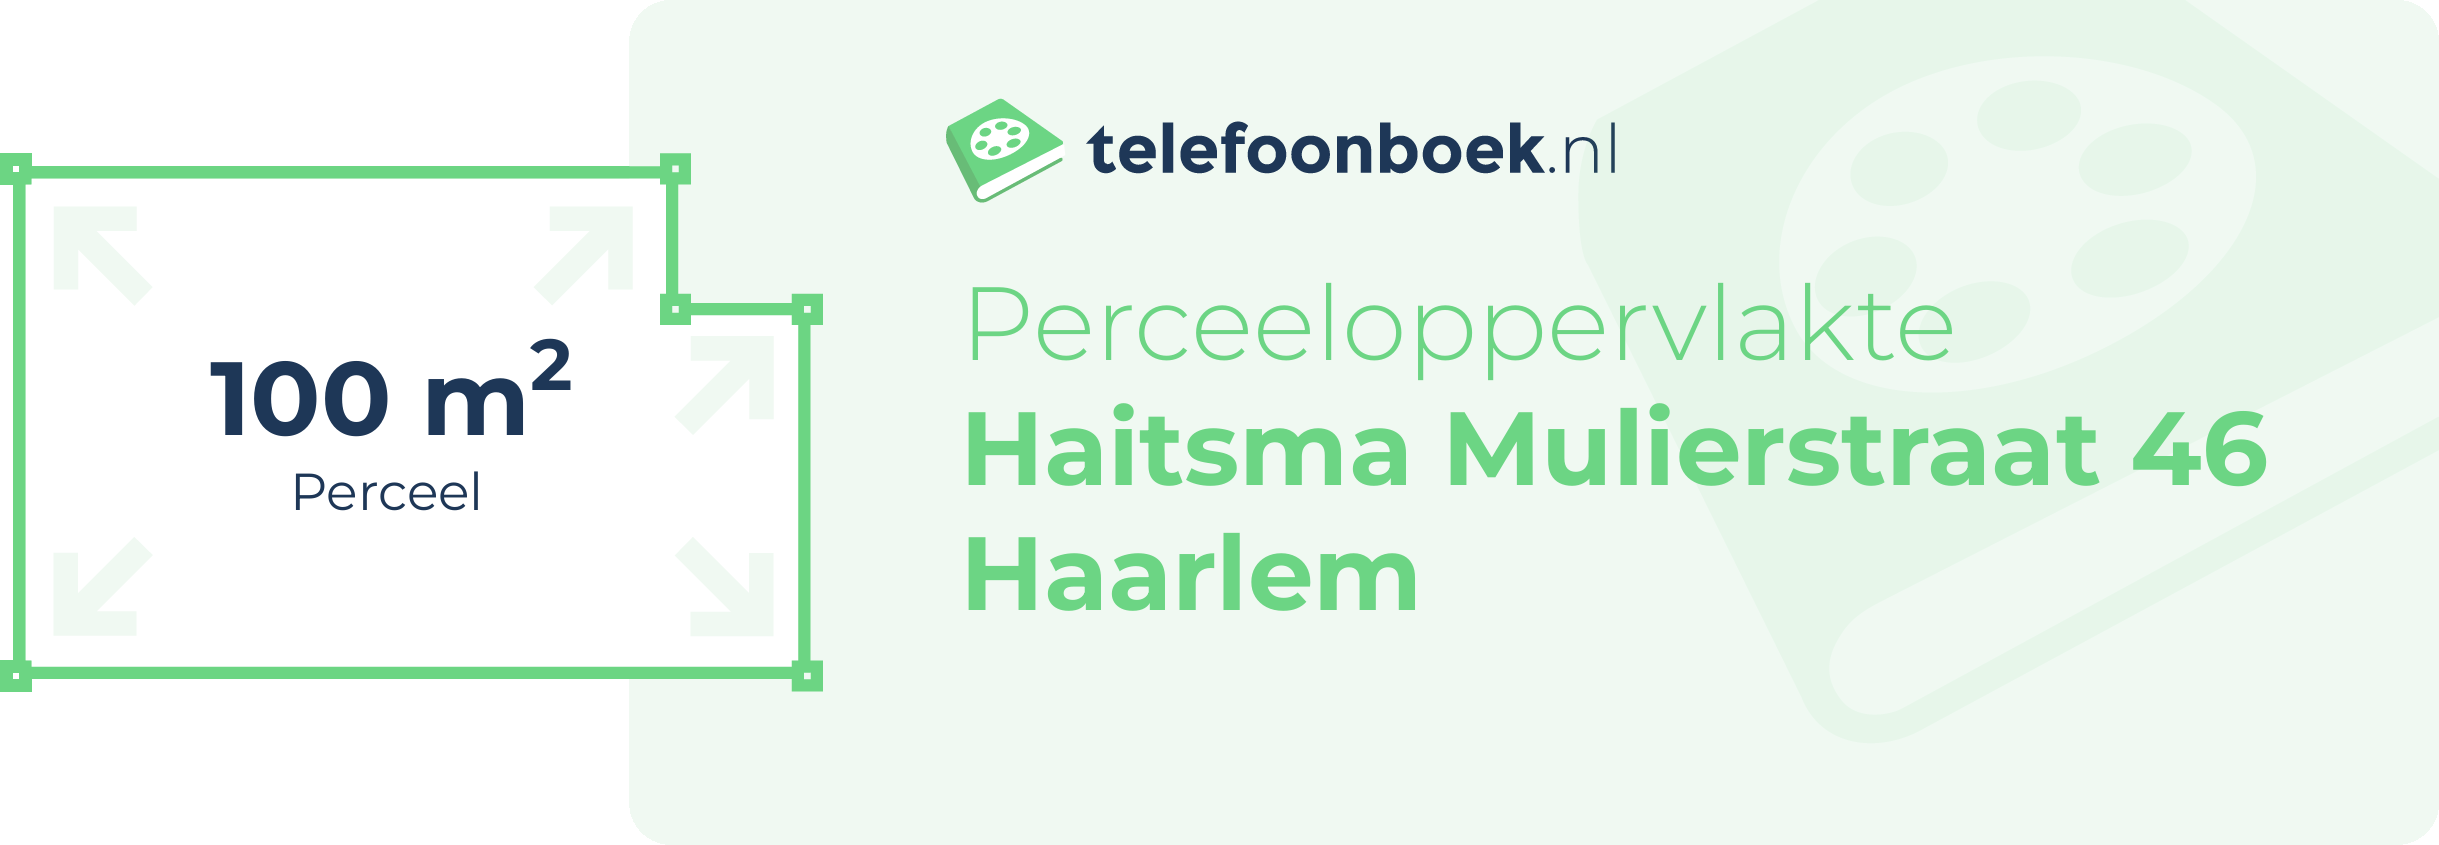 Perceeloppervlakte Haitsma Mulierstraat 46 Haarlem